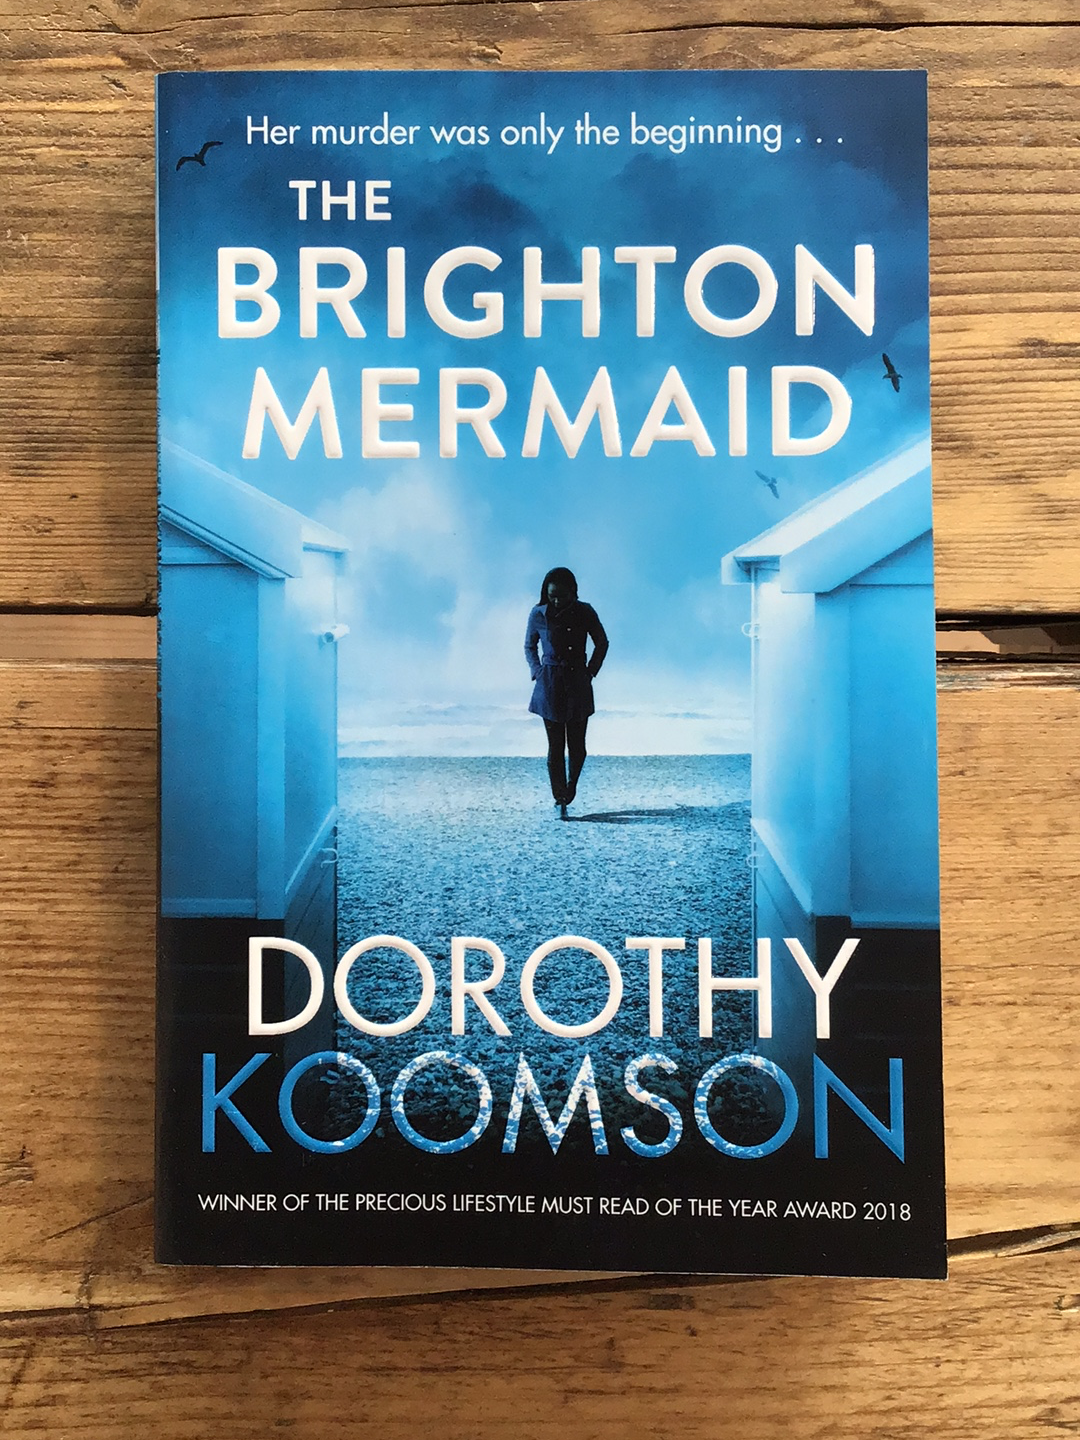 The Brighton Mermaid